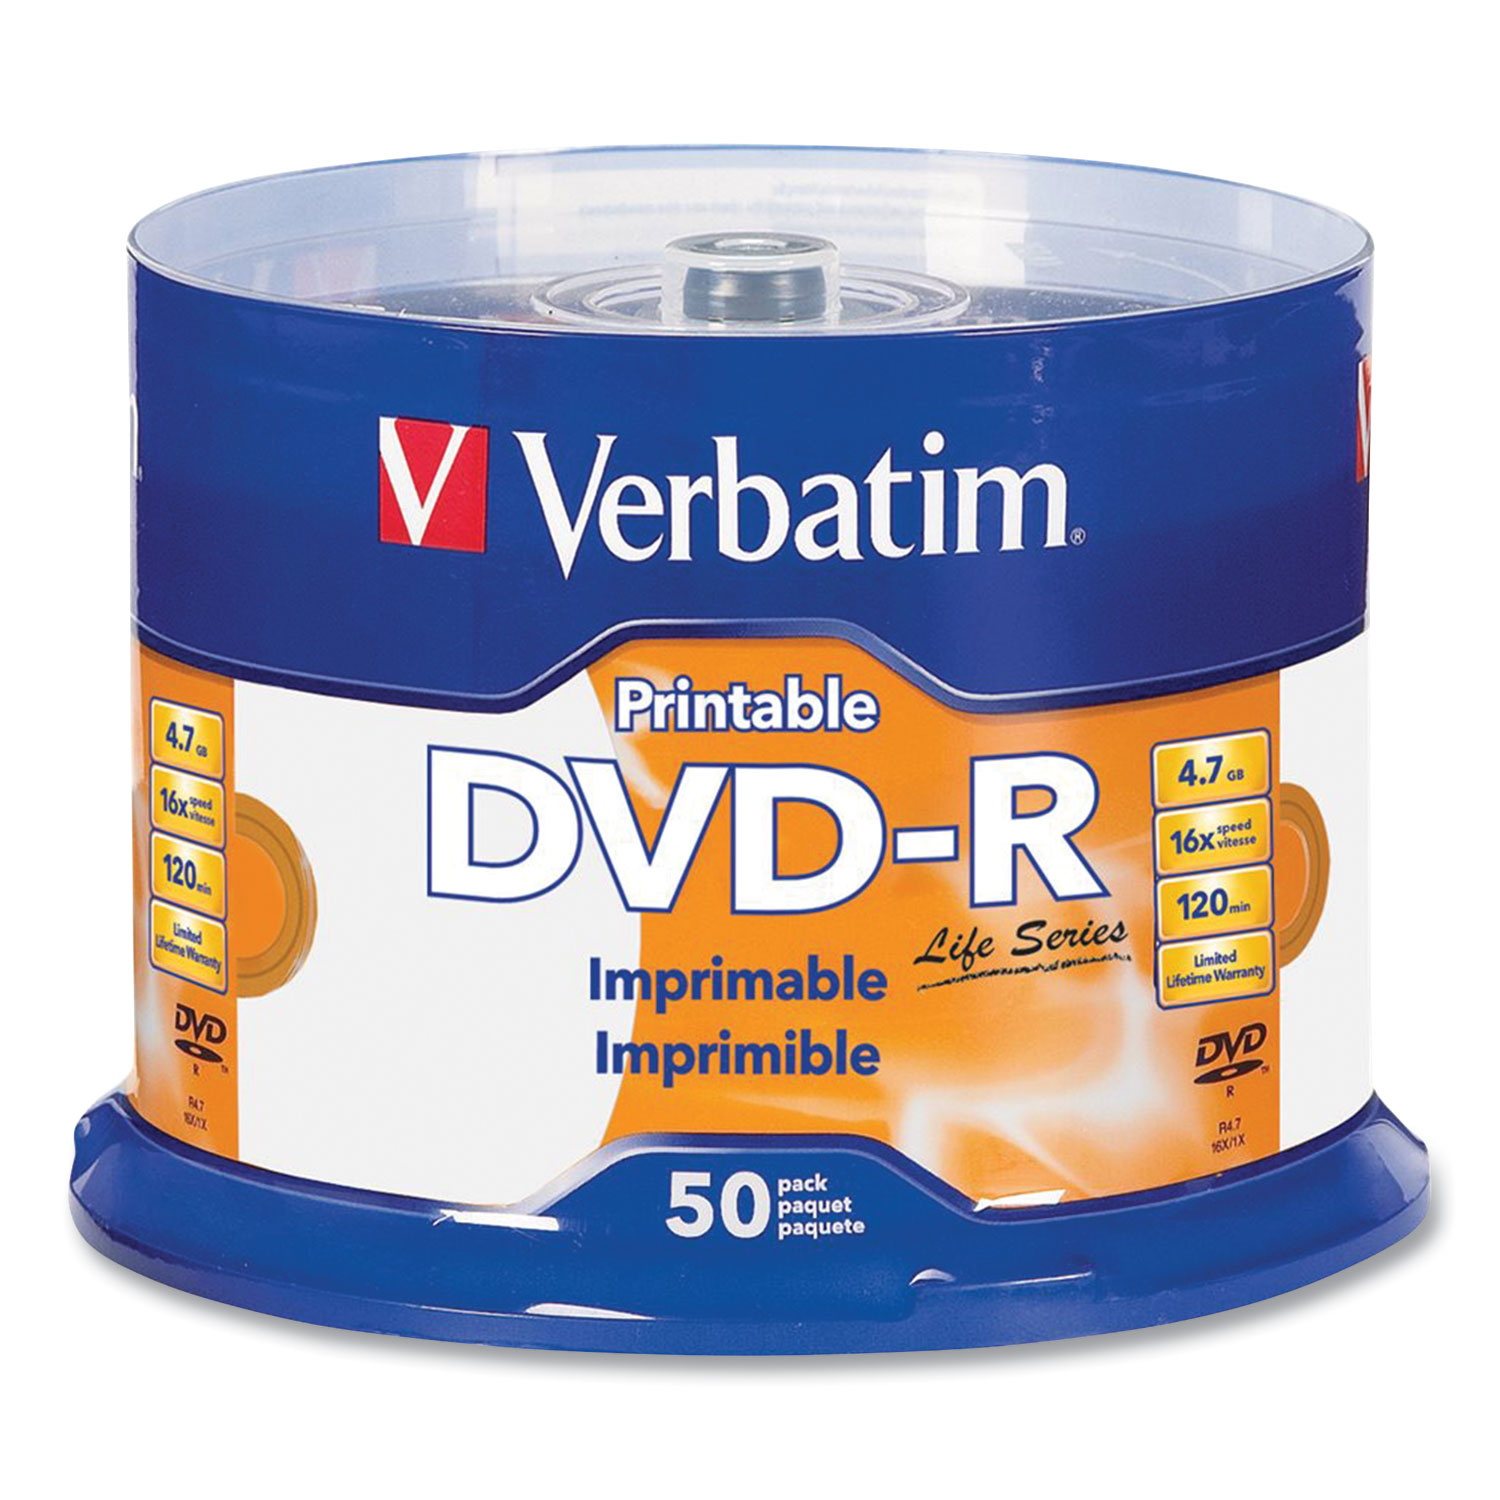 Verbatim® DVD-R LifeSeries Printable Disc, 4.7 GB, 16x, Spindle, White, 50/Pack